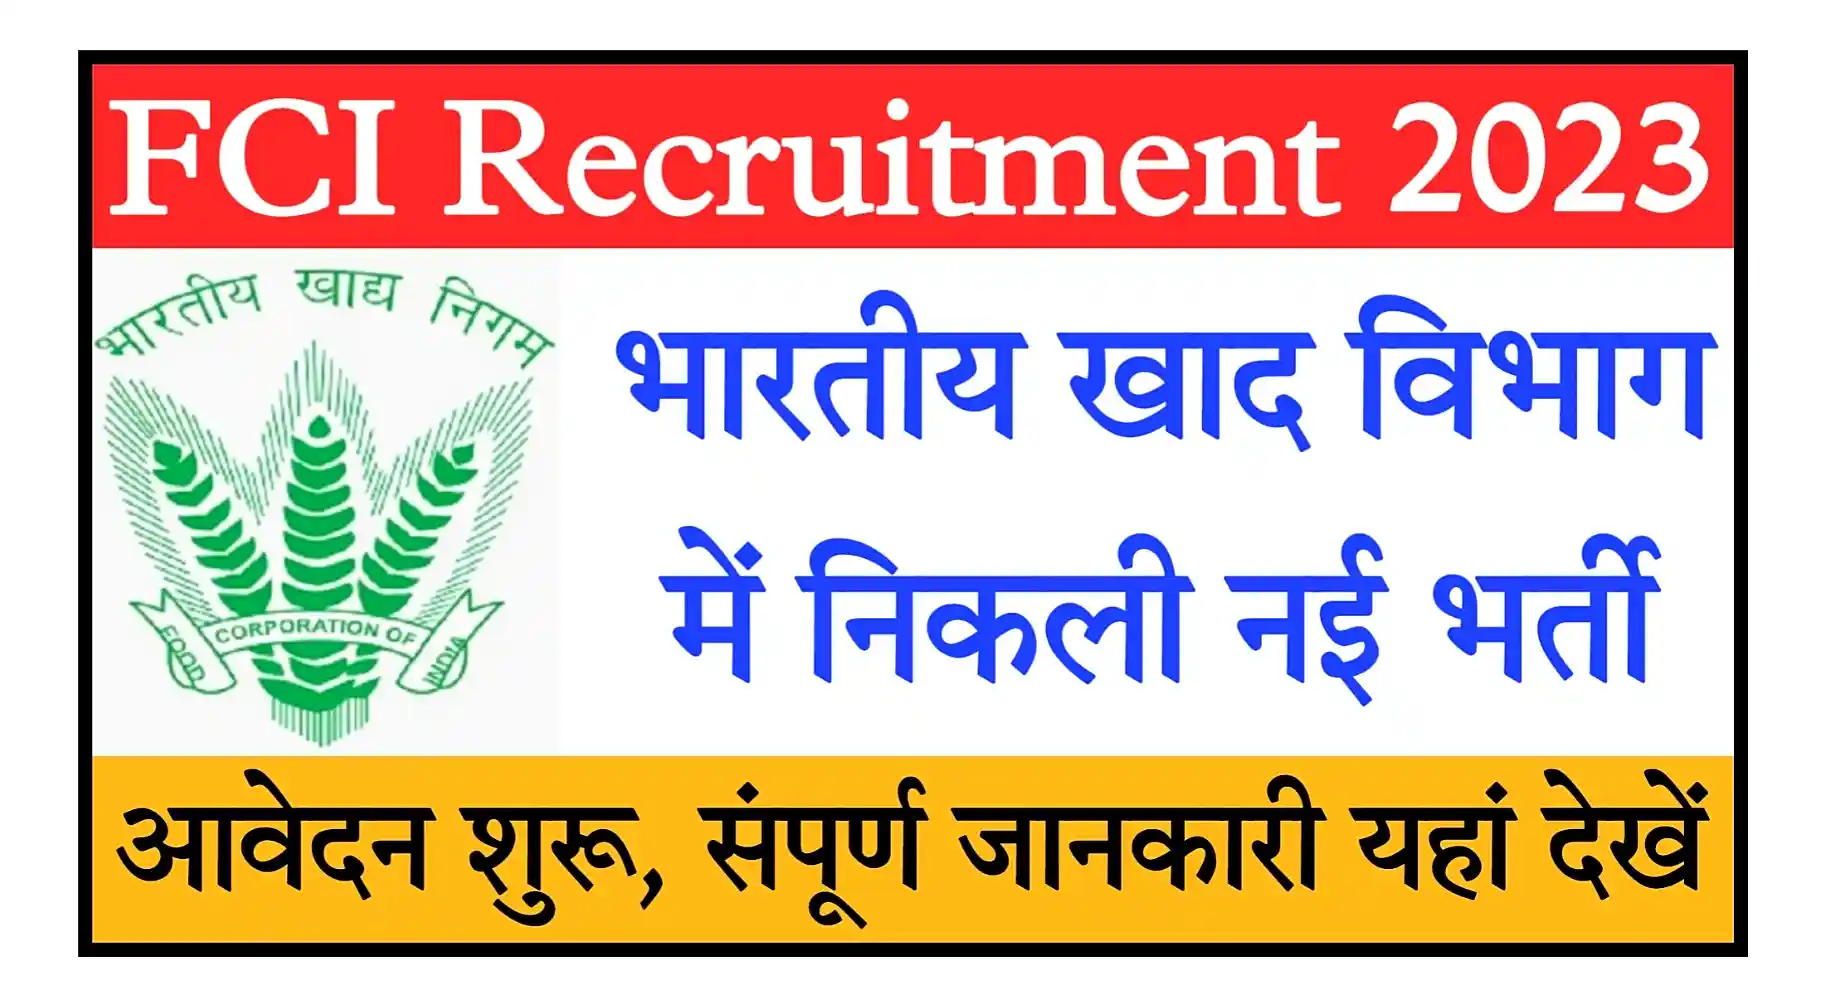 FCI Recruitment 2023 Notification, Apply Offline भारतीय खाद्य विभाग भर्ती 2023 का नोटिफिकेशन जारी, आवेदन शुरू